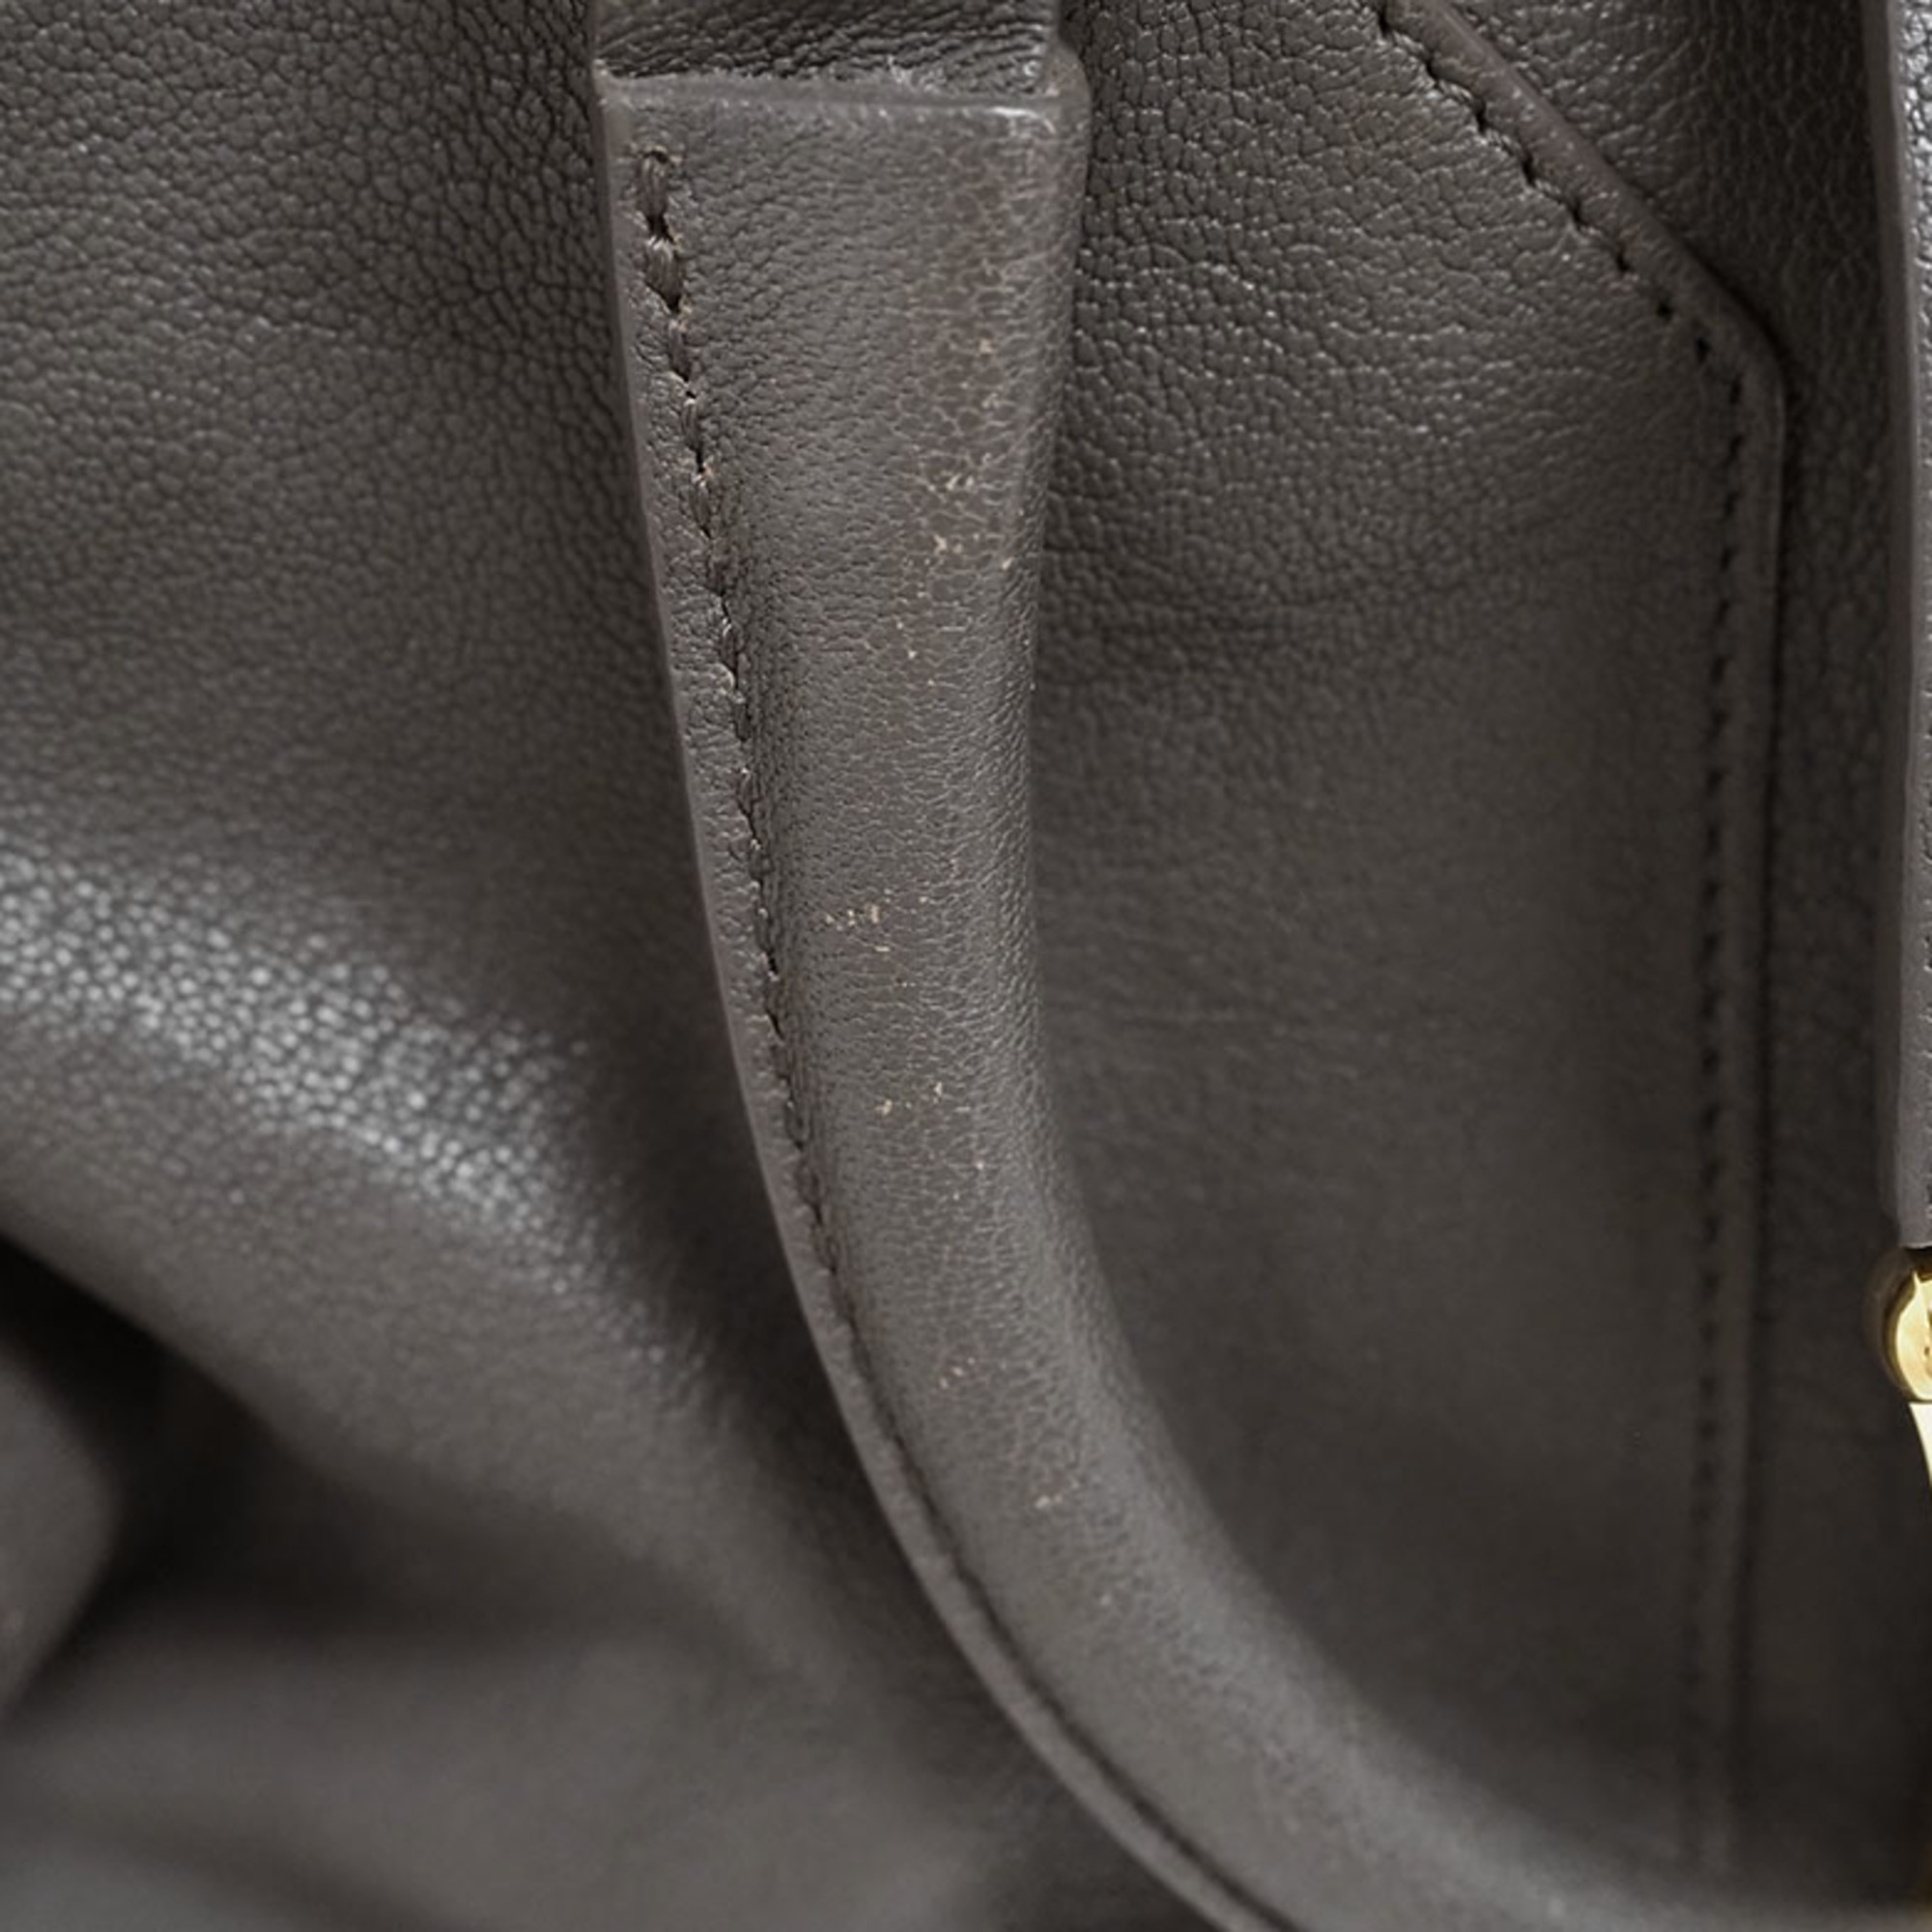 Yves Saint Laurent Cabas Chic Handbag Grey 400600 Leather Women's YSL YVES SAINT LAURENT